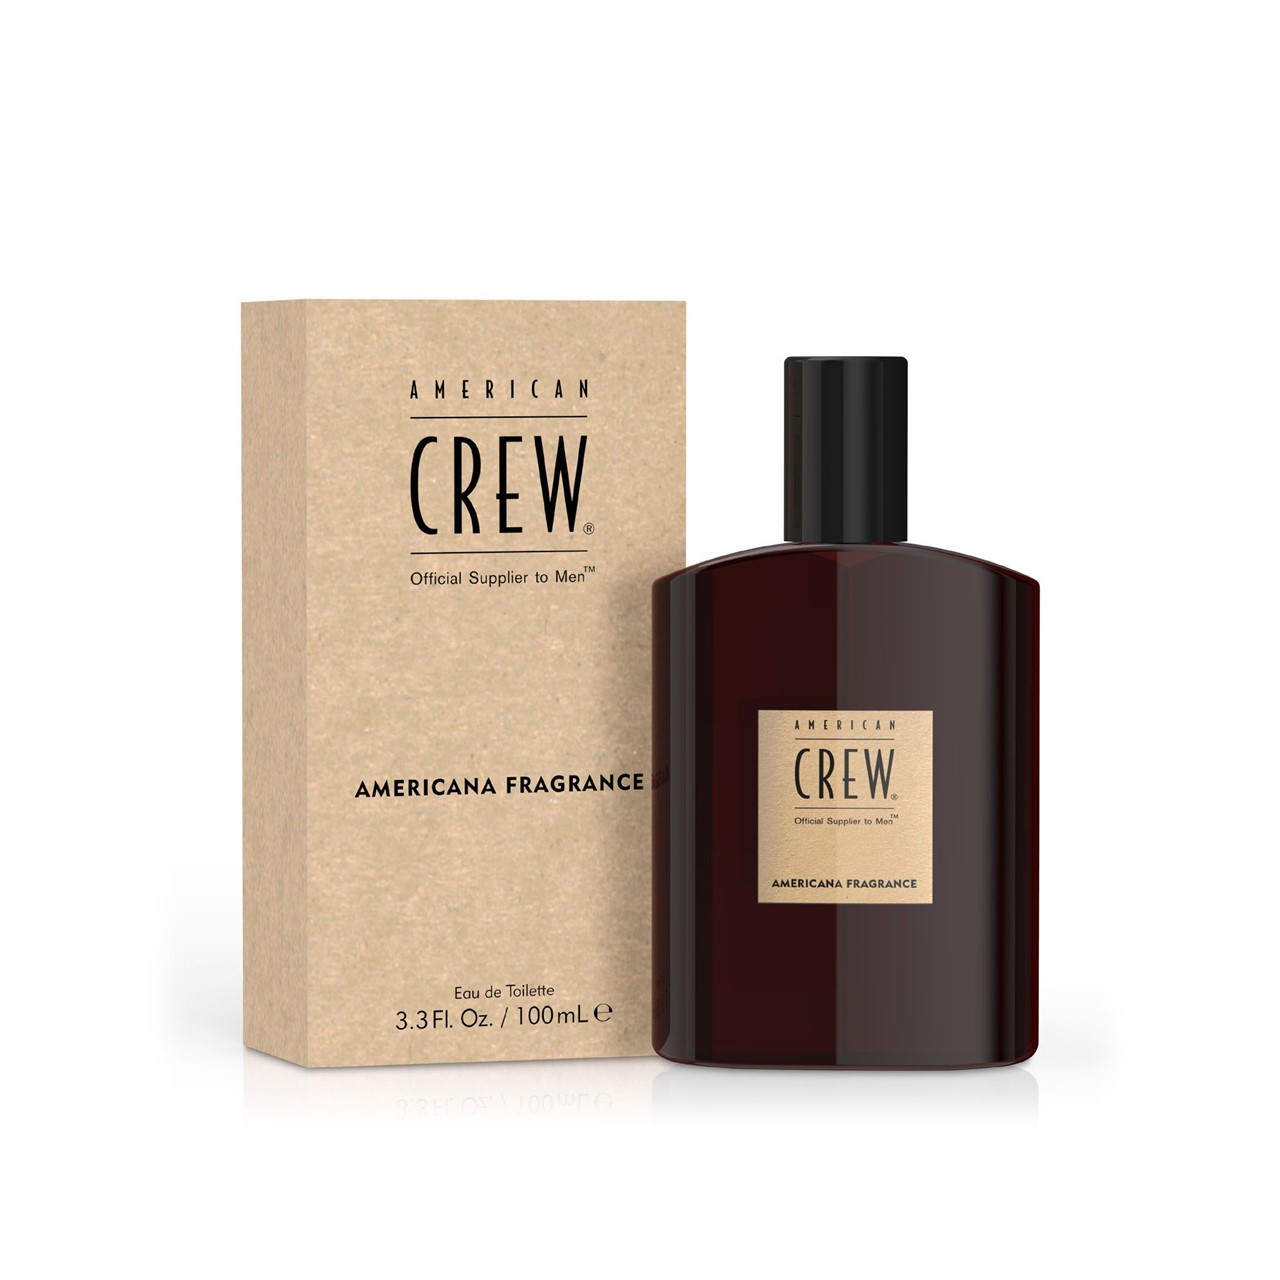 https://static.beautytocare.com/media/catalog/product/a/m/american-crew-americana-fragrance-100ml.jpg